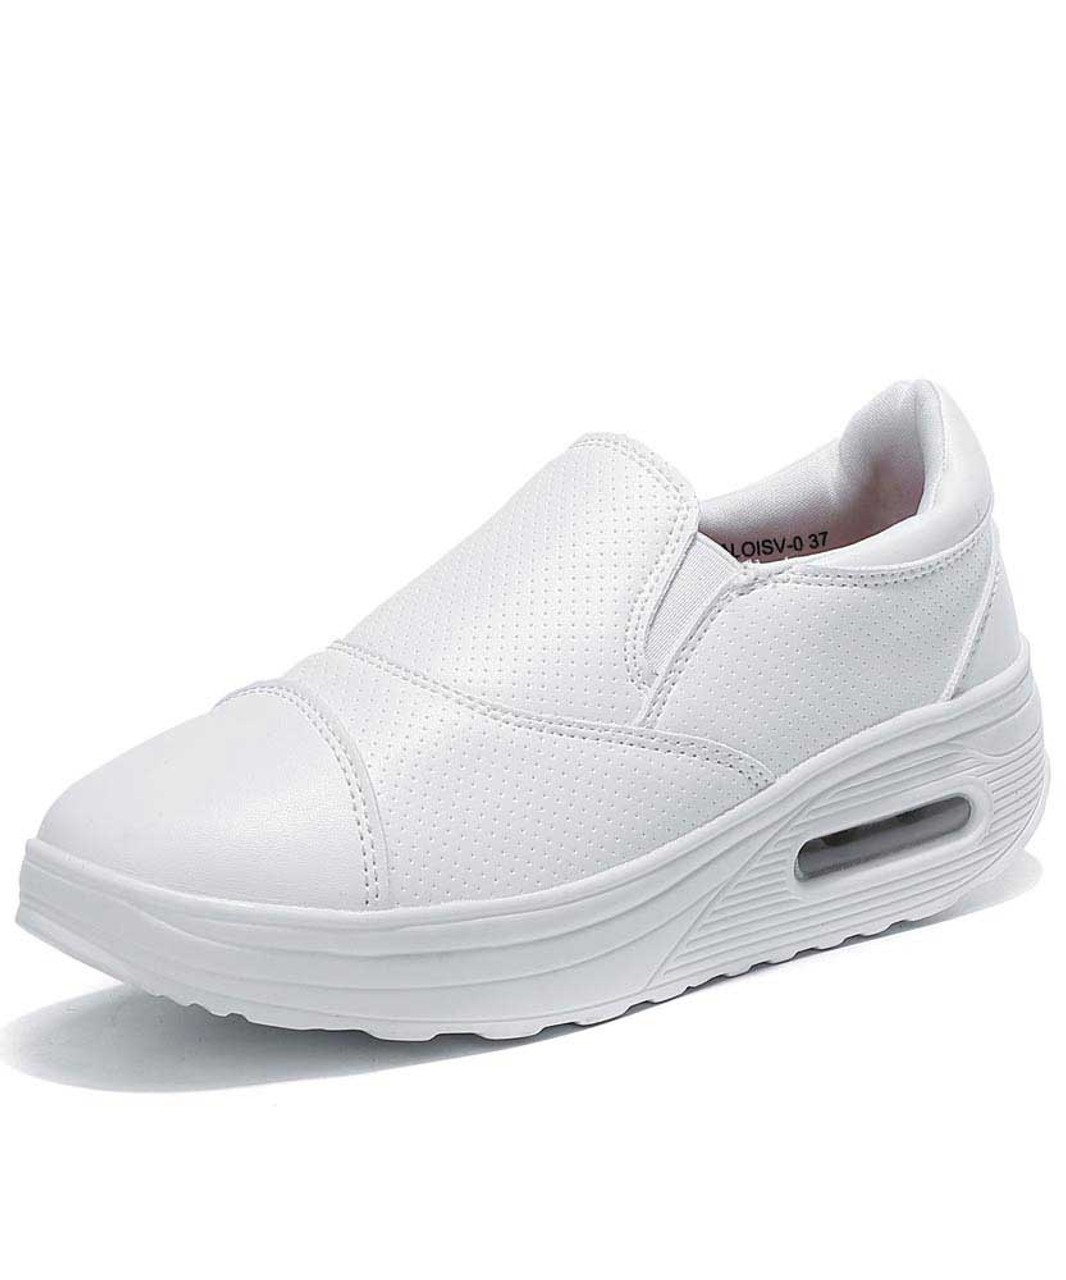 plain white slip on shoes